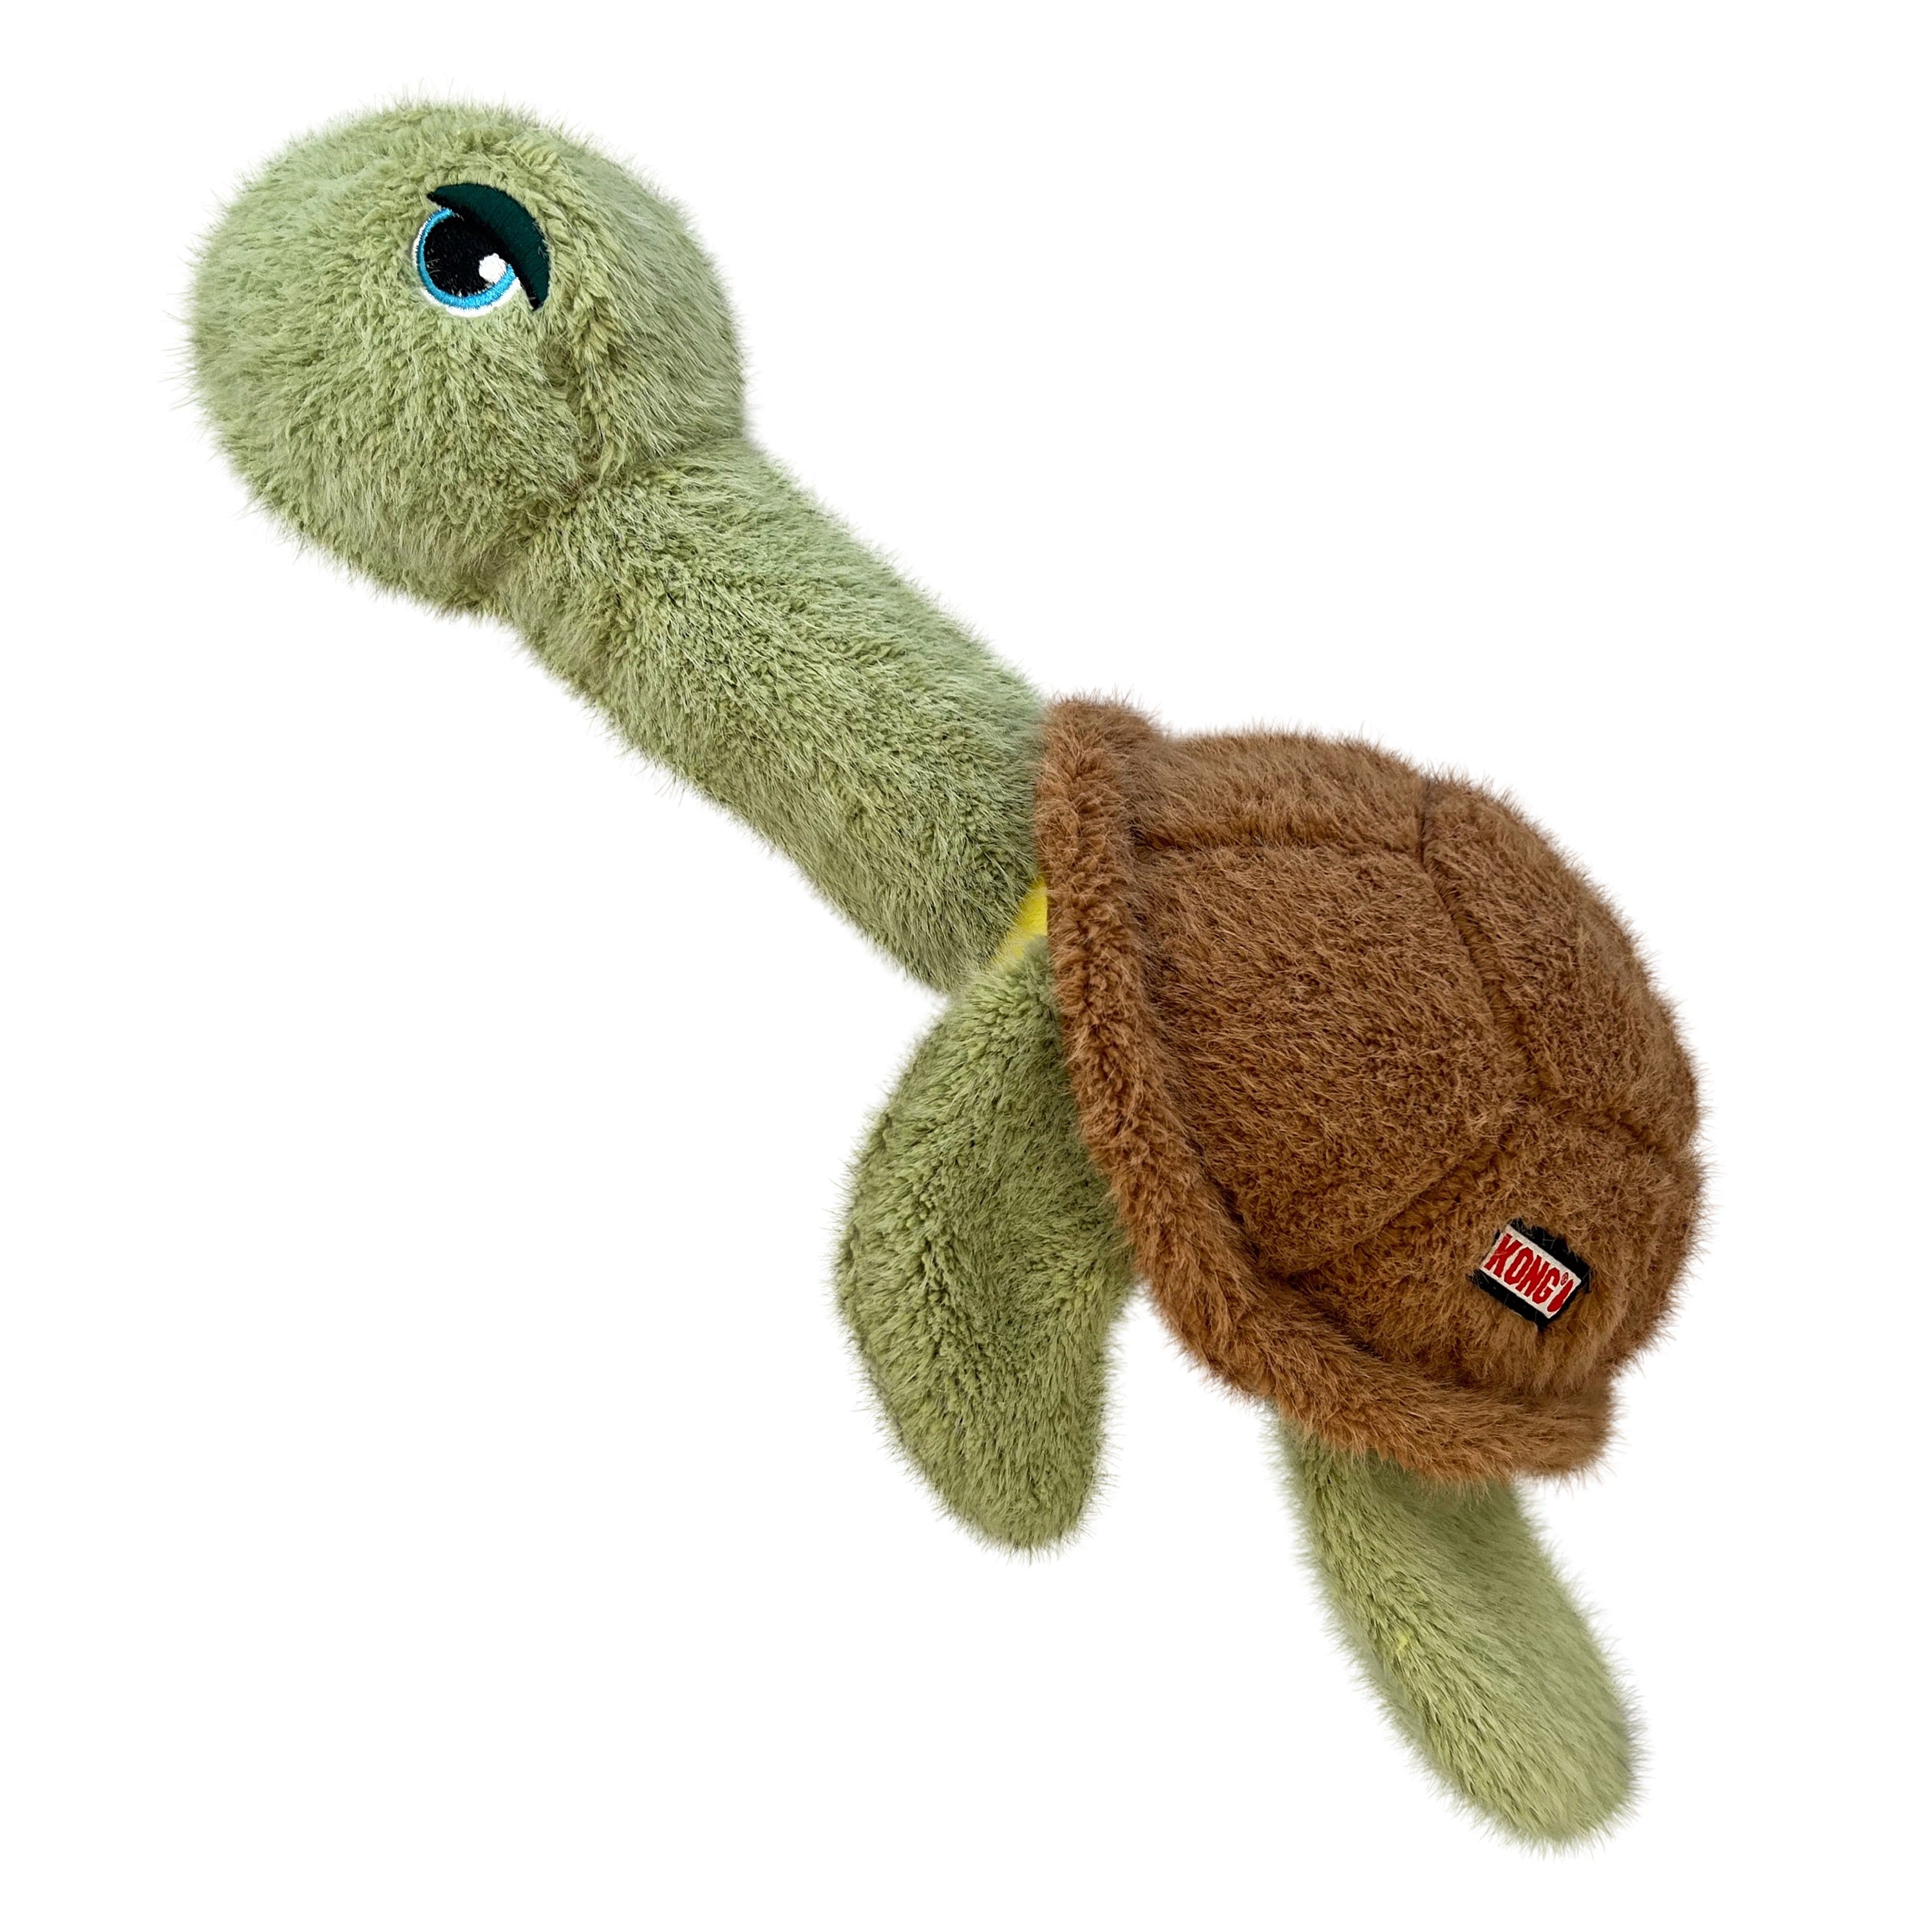 Scruffs Turtle de Kong - Juguete de Peluche de Tortuga